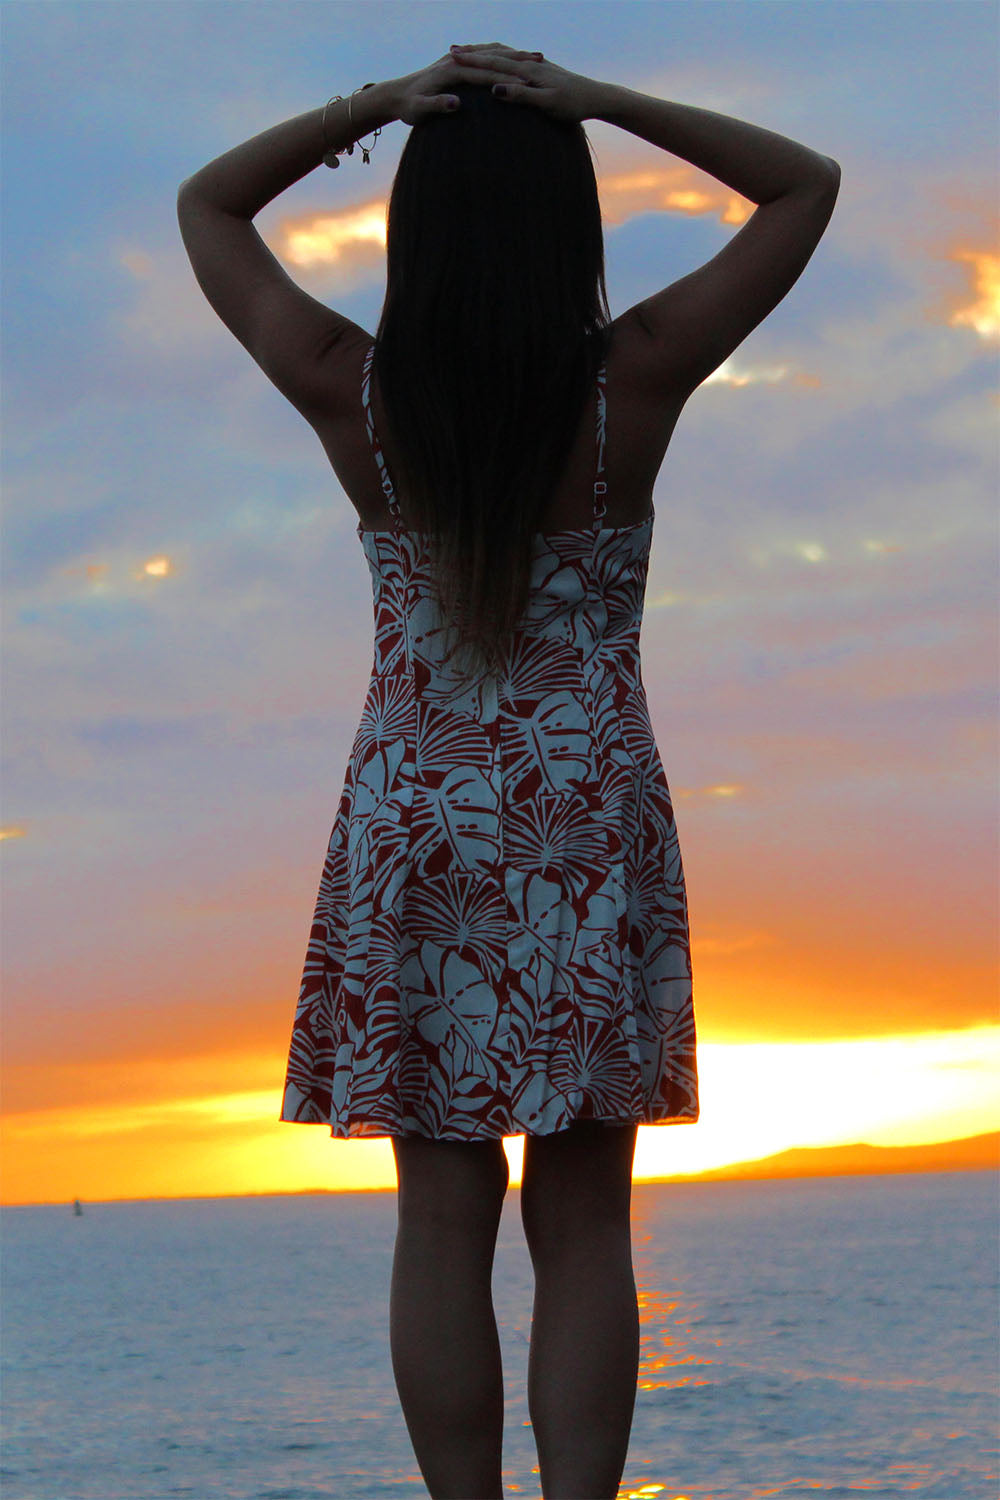 enjoying a beautiful sunset in this simple spaghetti Hawaiian dress